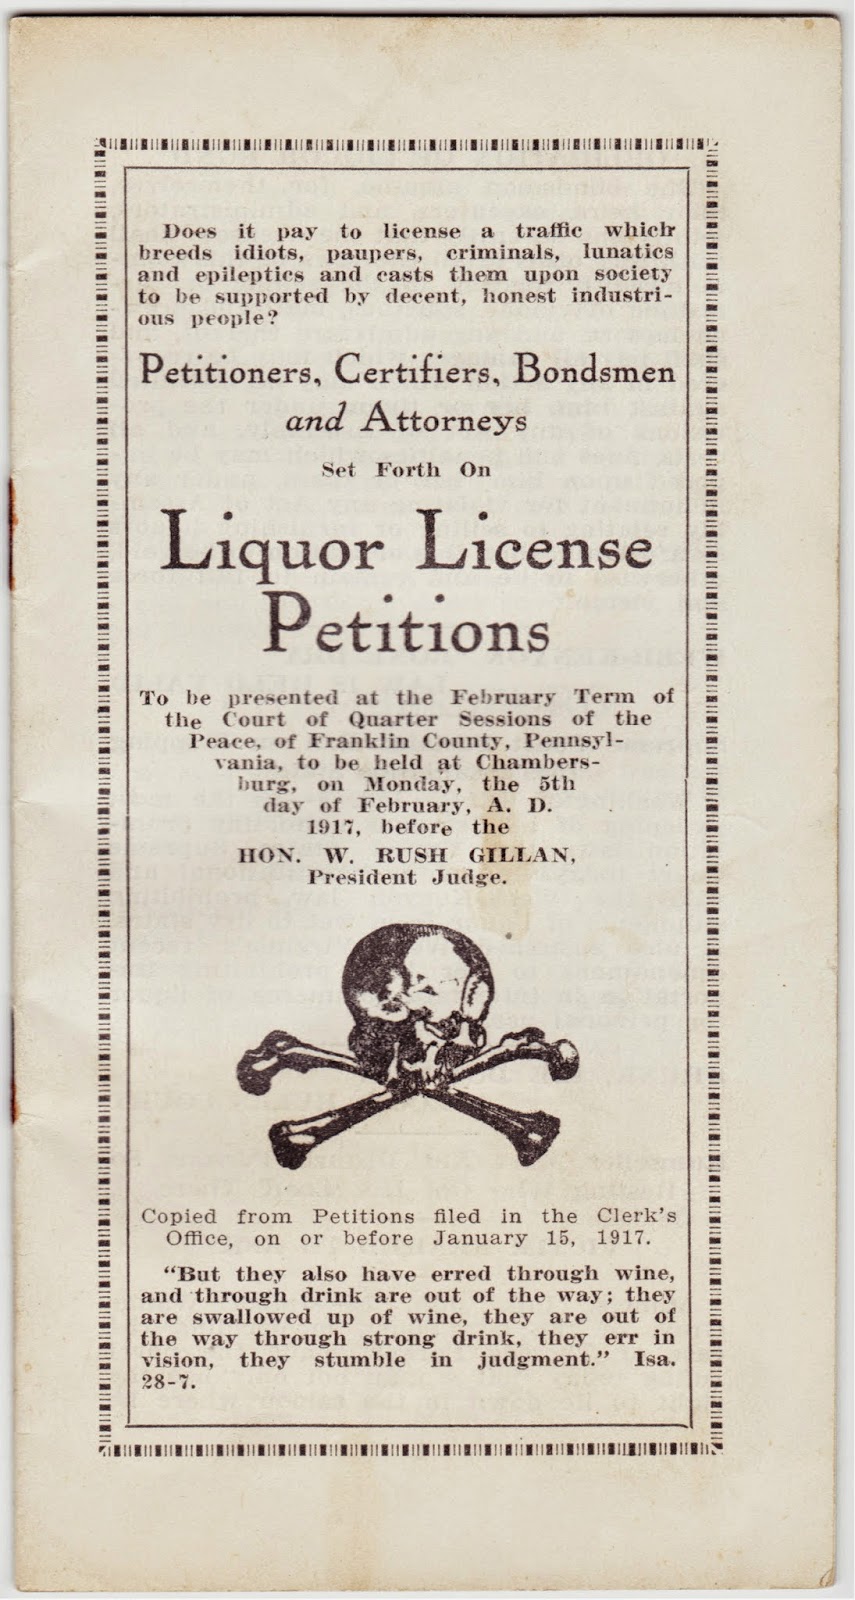 oklahoma liquor license fraternal organizations